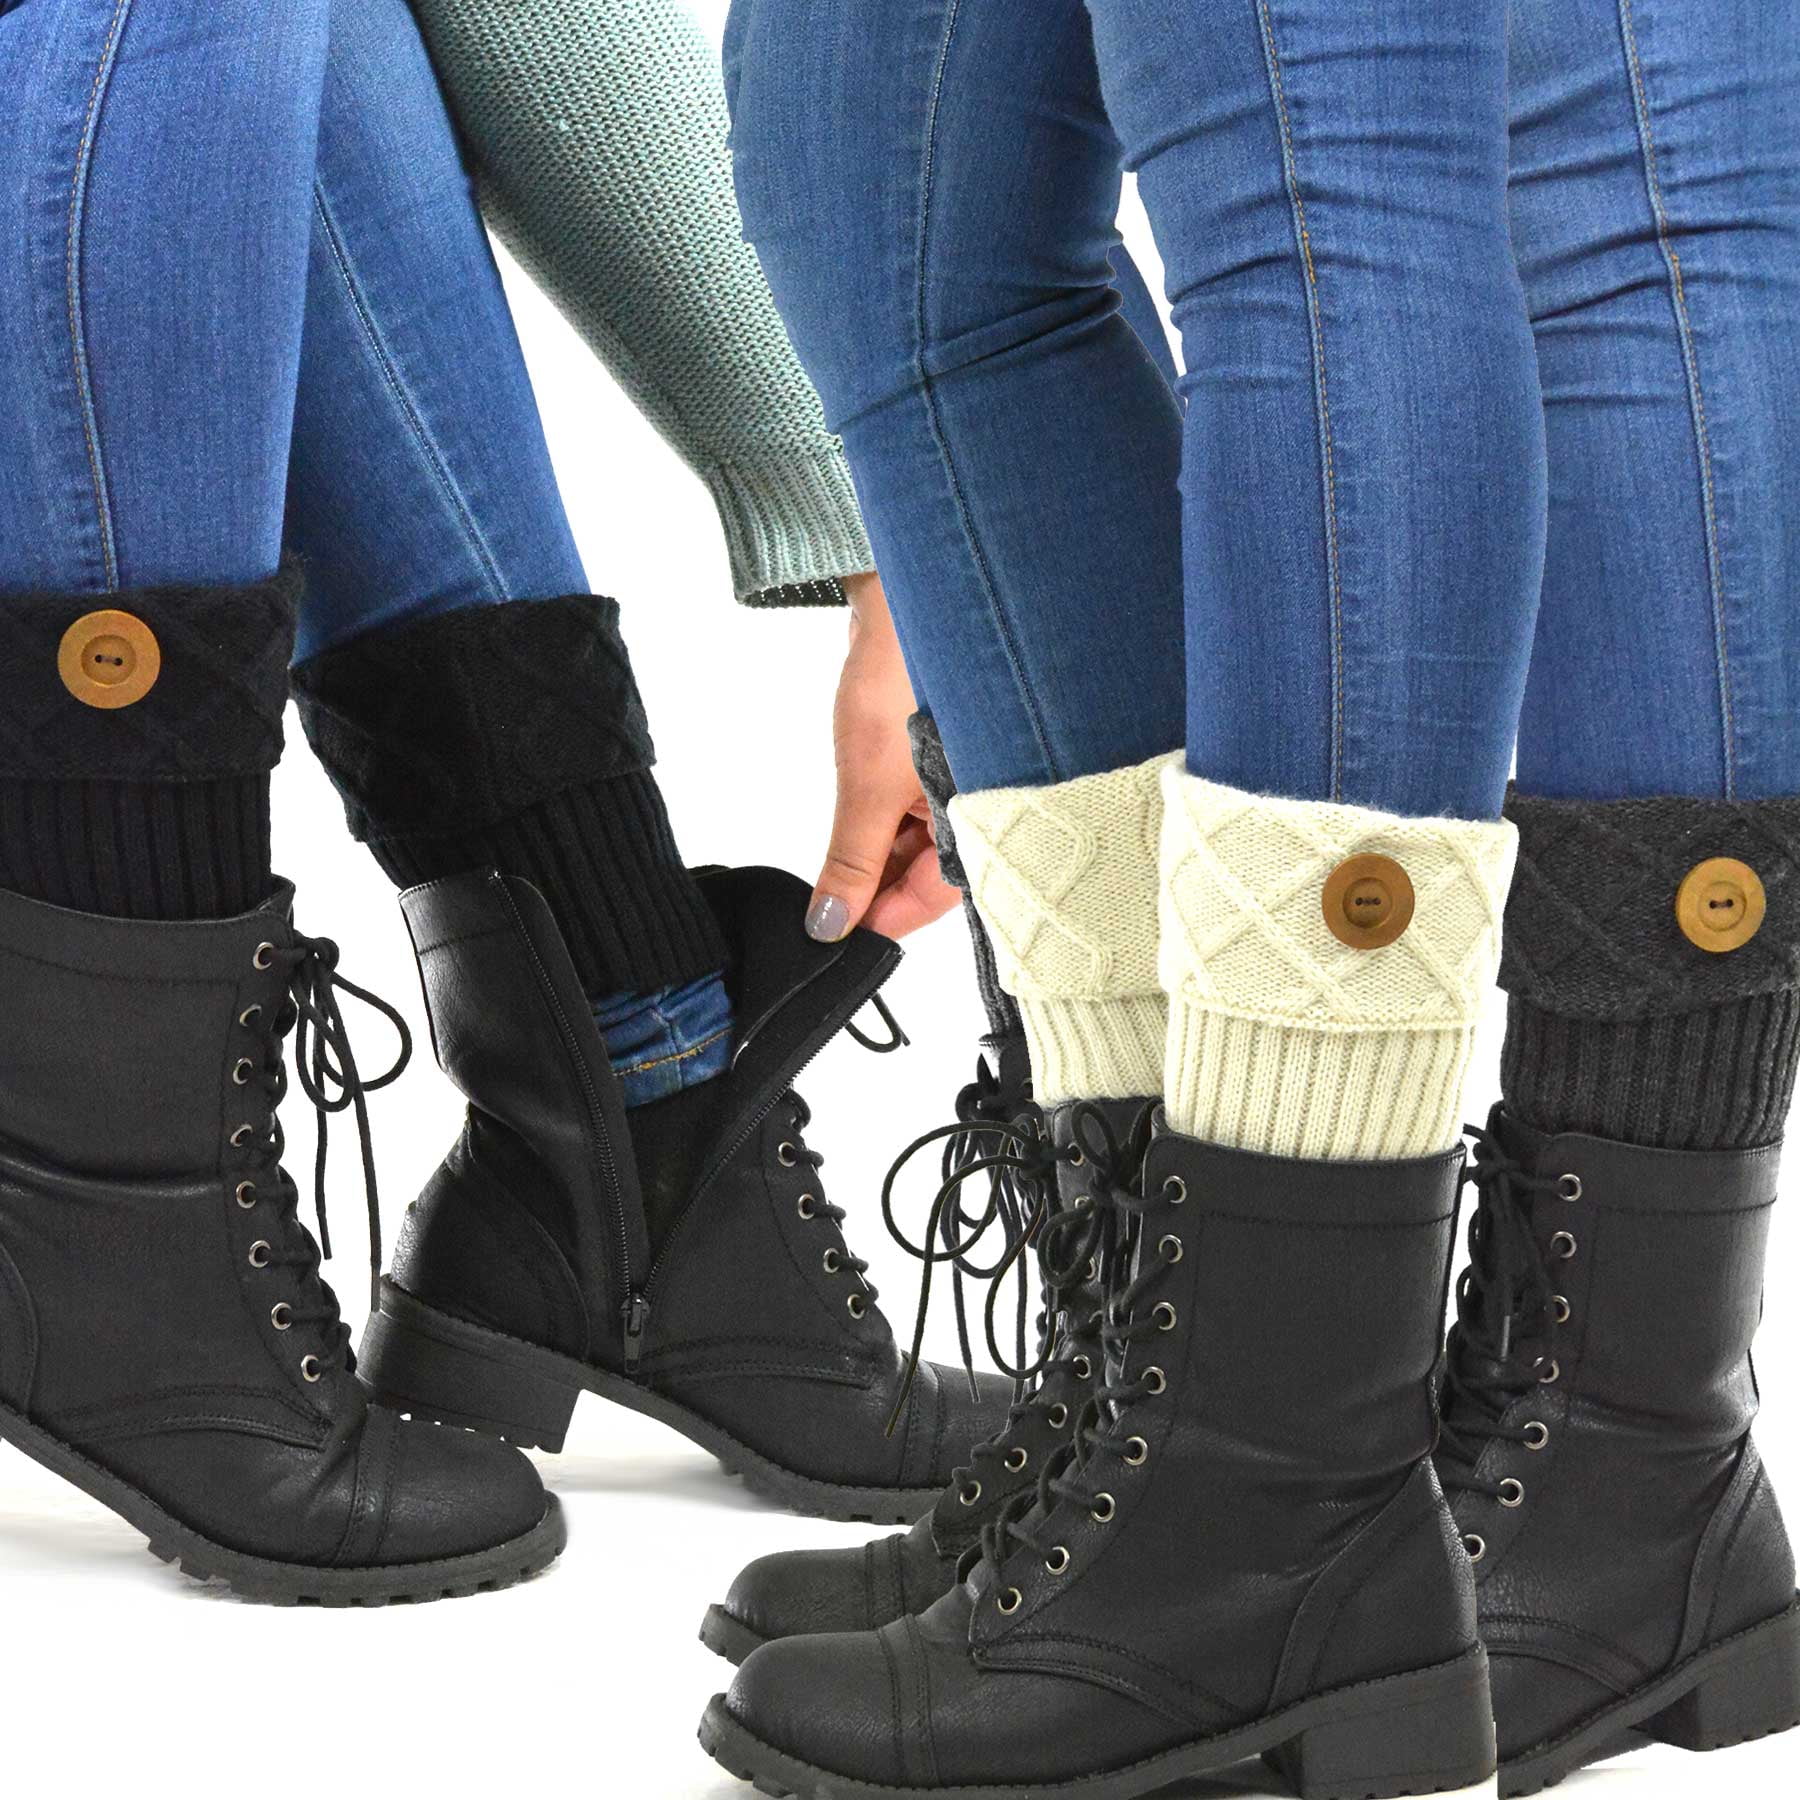 TeeHee Women's Fashion Boot Cuffs and 